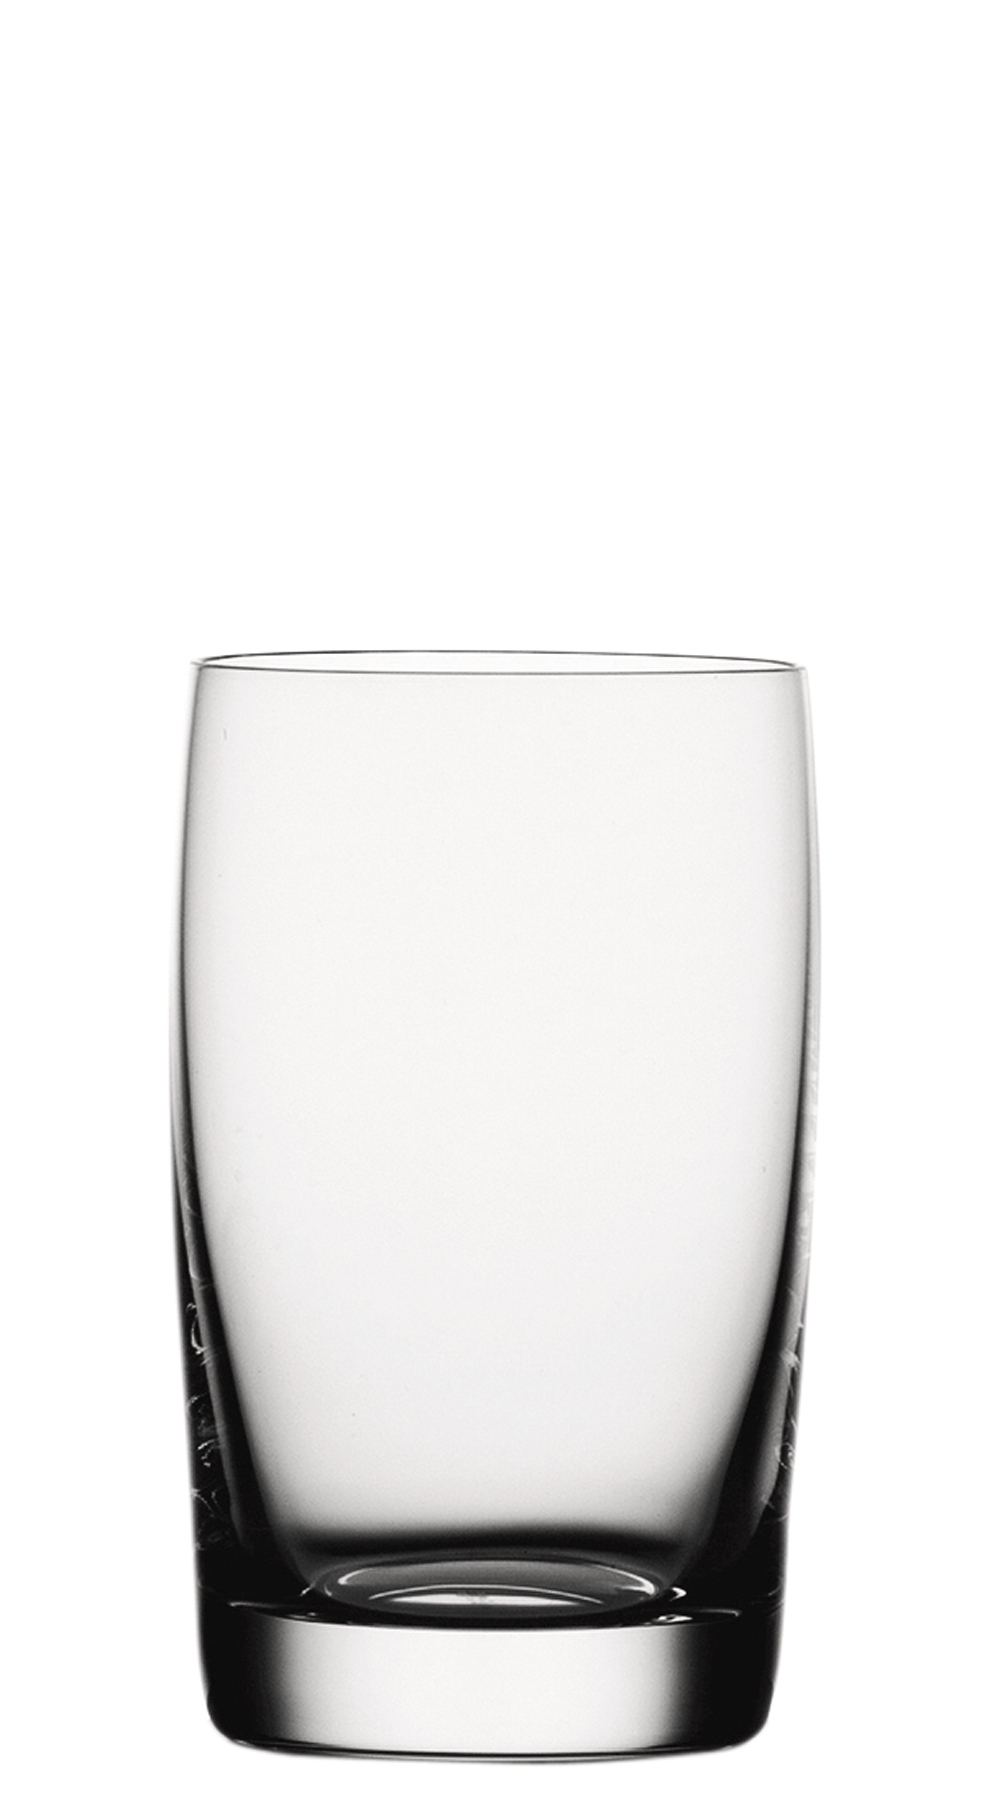 Juice cup glass Soiree, Spiegelau - 218ml (1 pc.)